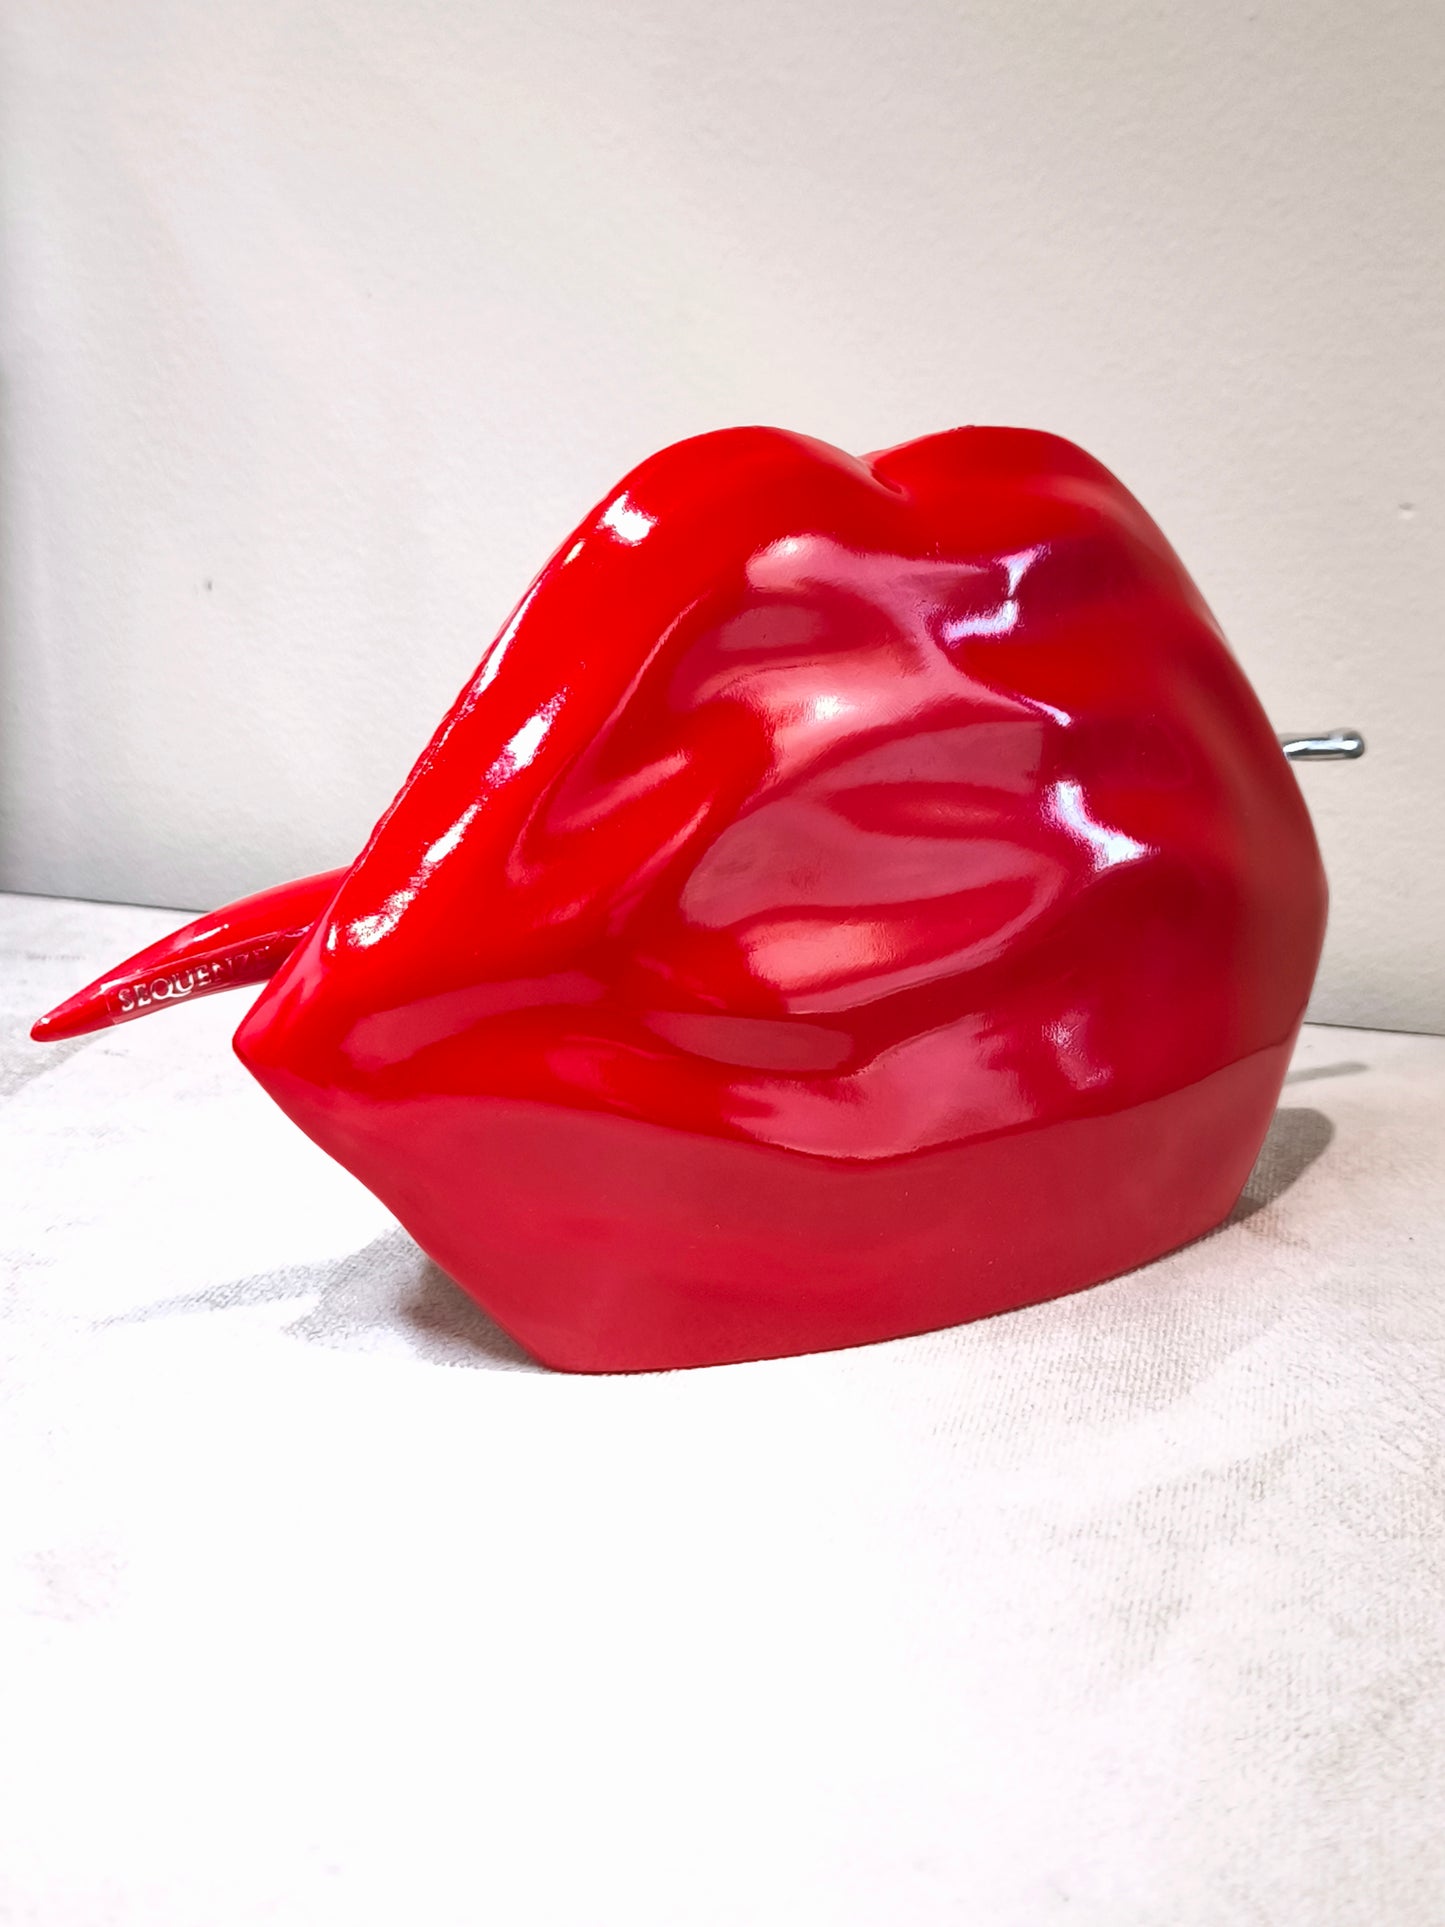 Bocca Pop-art rossa con peperoncino